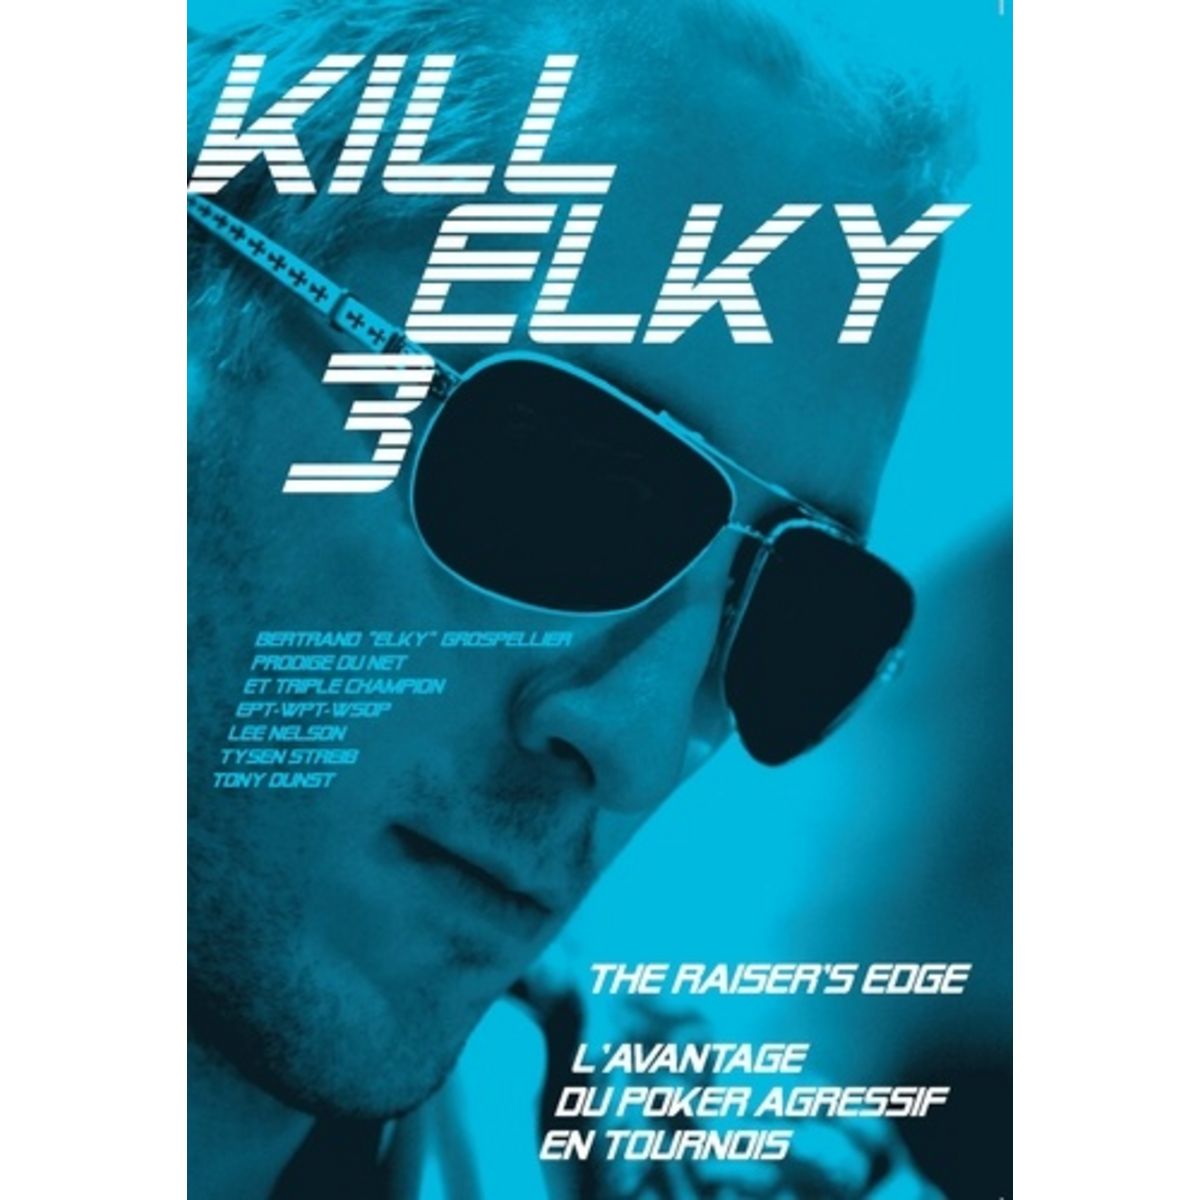  KILL ELKY. TOME 3, L'AVANTAGE DU POKER AGRESSIF EN TOURNOIS, Grospellier Bertrand